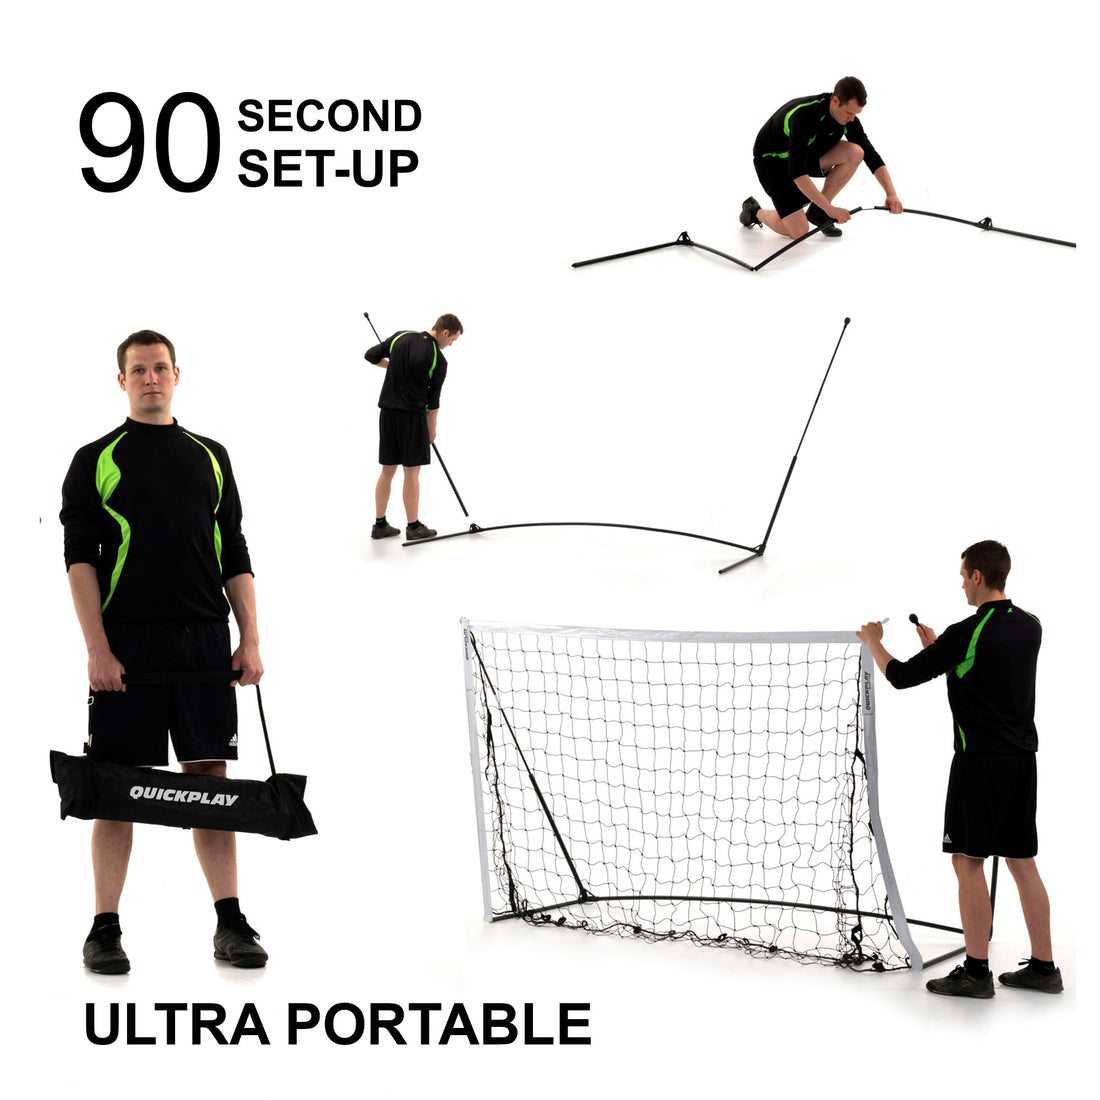 KICKSTER PRO Portable Futsal Goal 3x2m